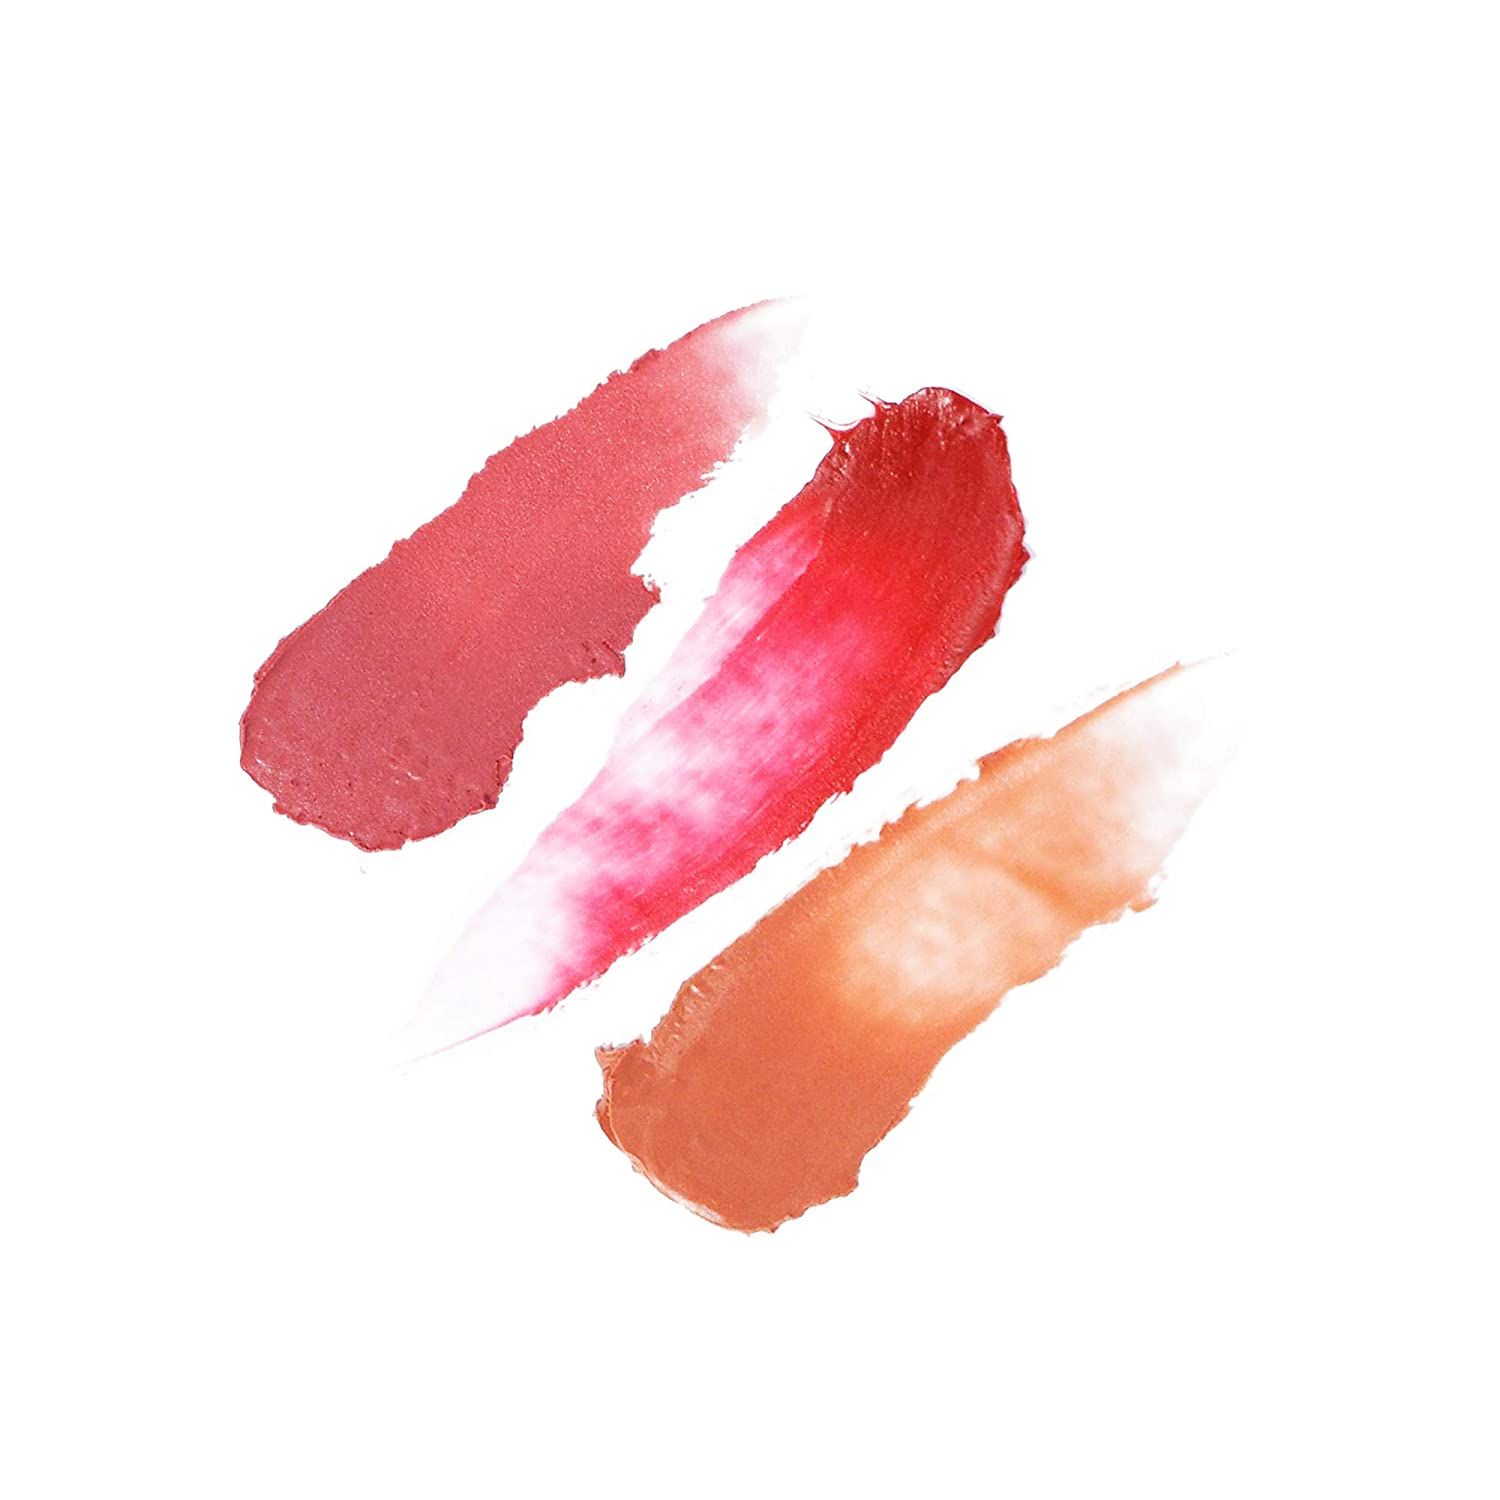 MDSolarSciences Hydrating SPF 30 Tinted Lip Balm Trio -  Ruby, Blush, and Bare